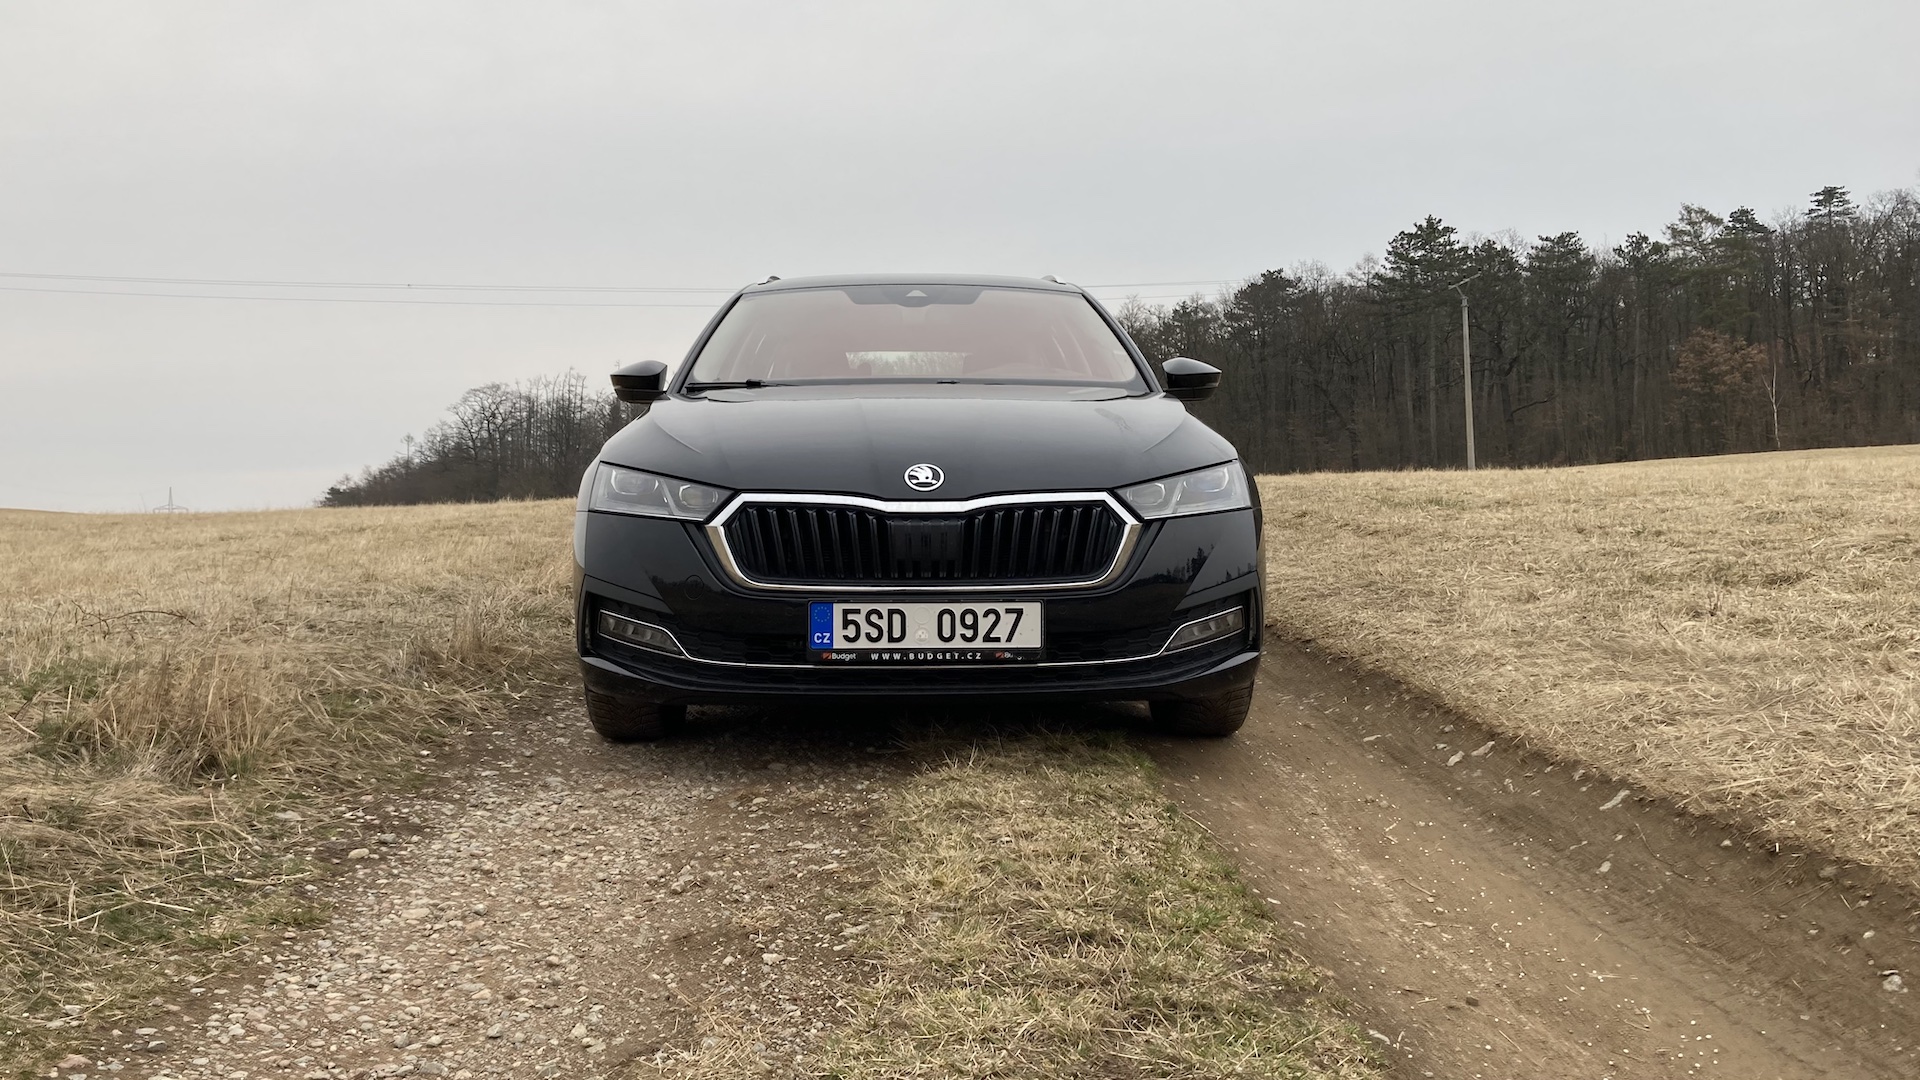 Škoda Octavia - přestavba na LPG